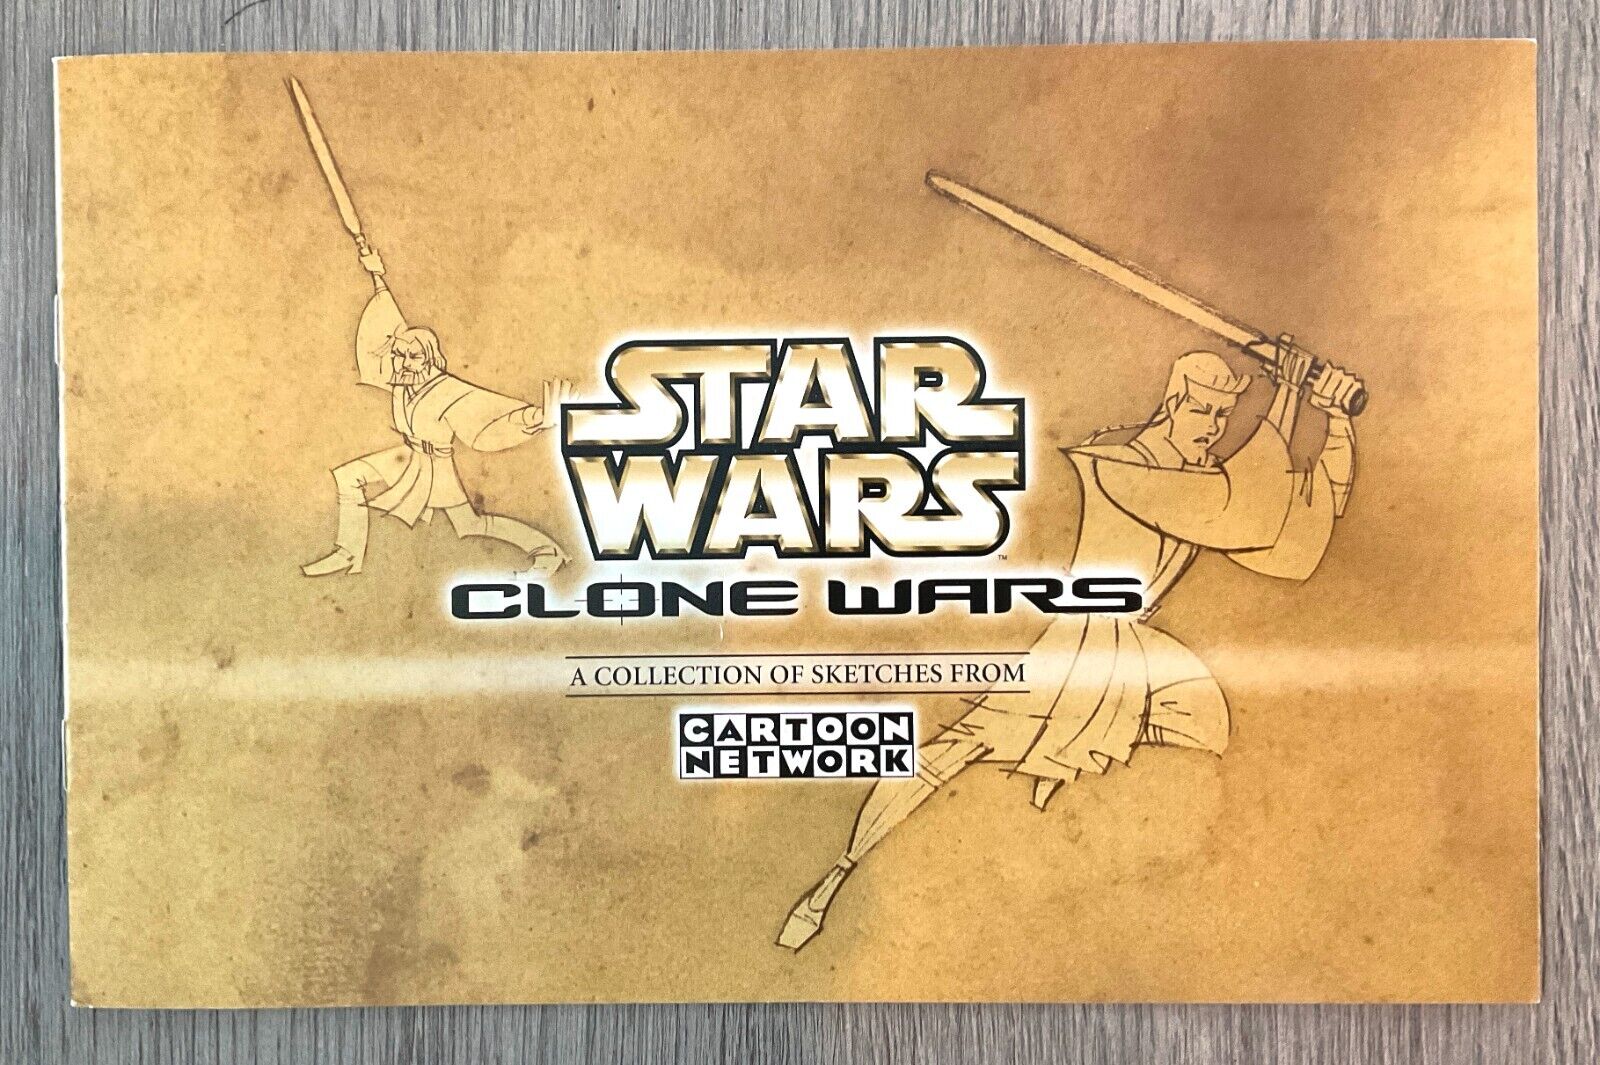 Star Wars CLONE WARS 2003 SDCC Exclusive Cartoon Network Sketch Book - RARE